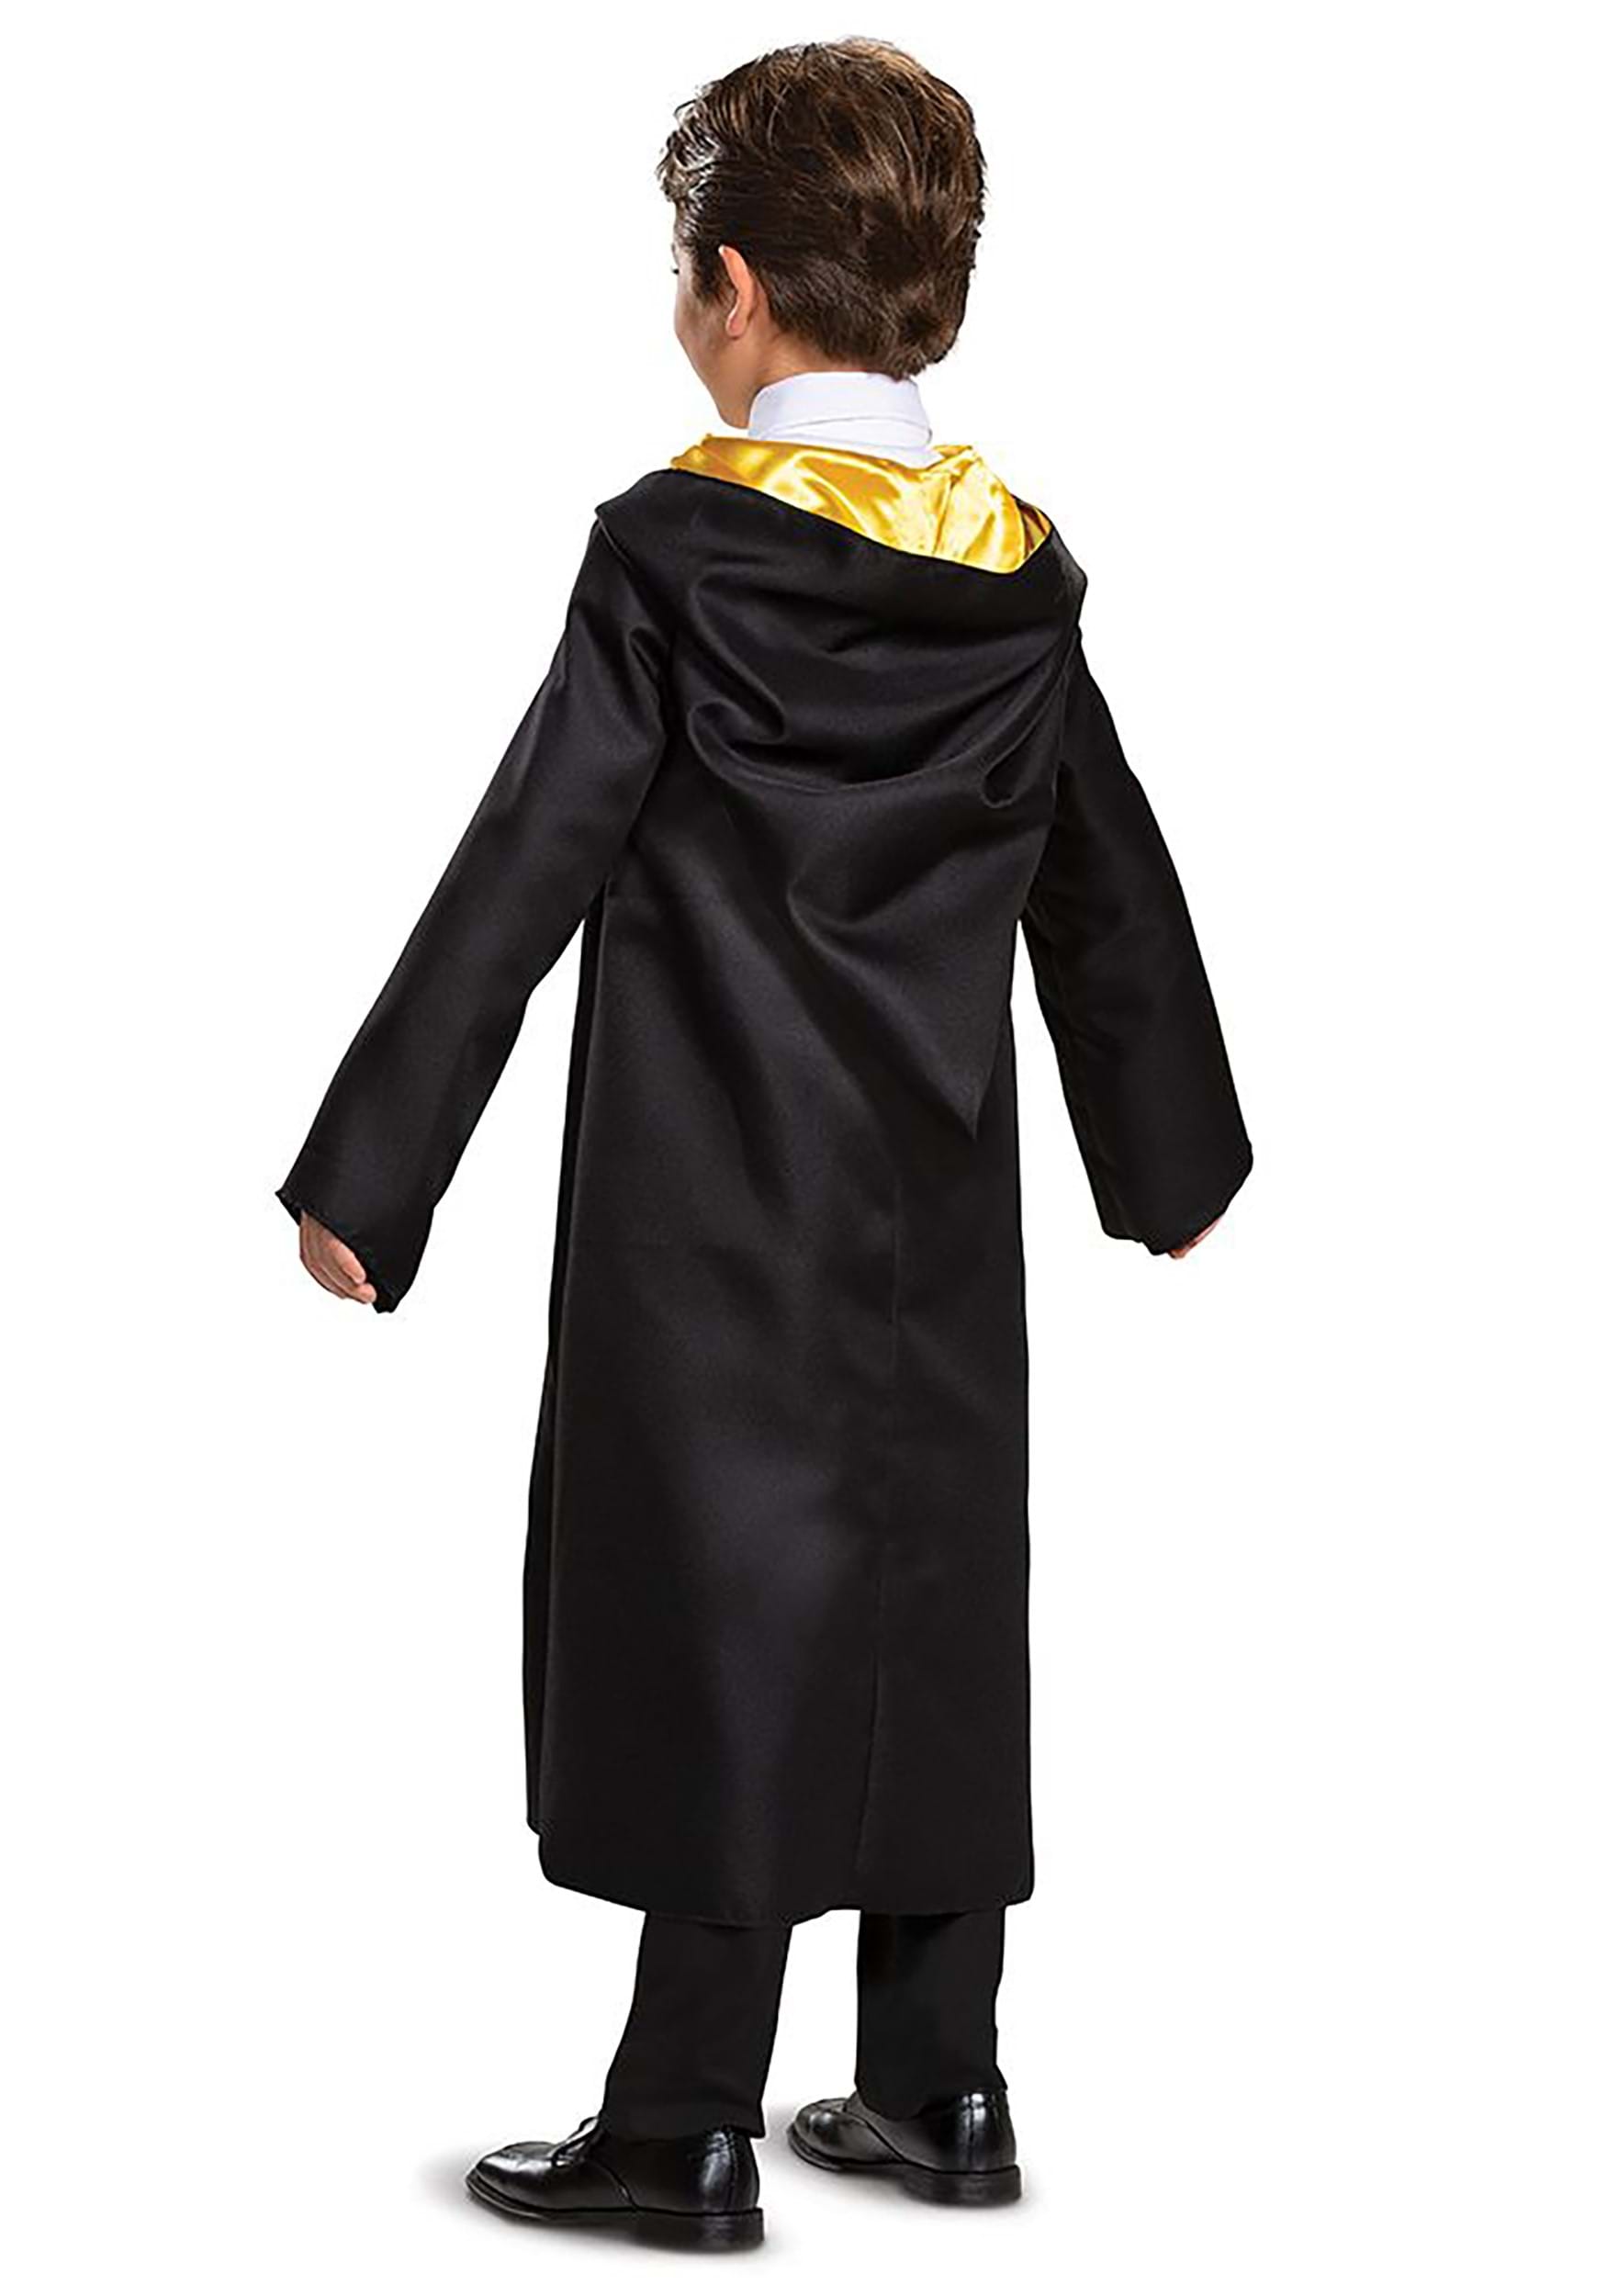 Black & Yellow Kids Size Small 4-6 Harry Potter Hufflepuff Robe Classic Childrens Costume Accessory 